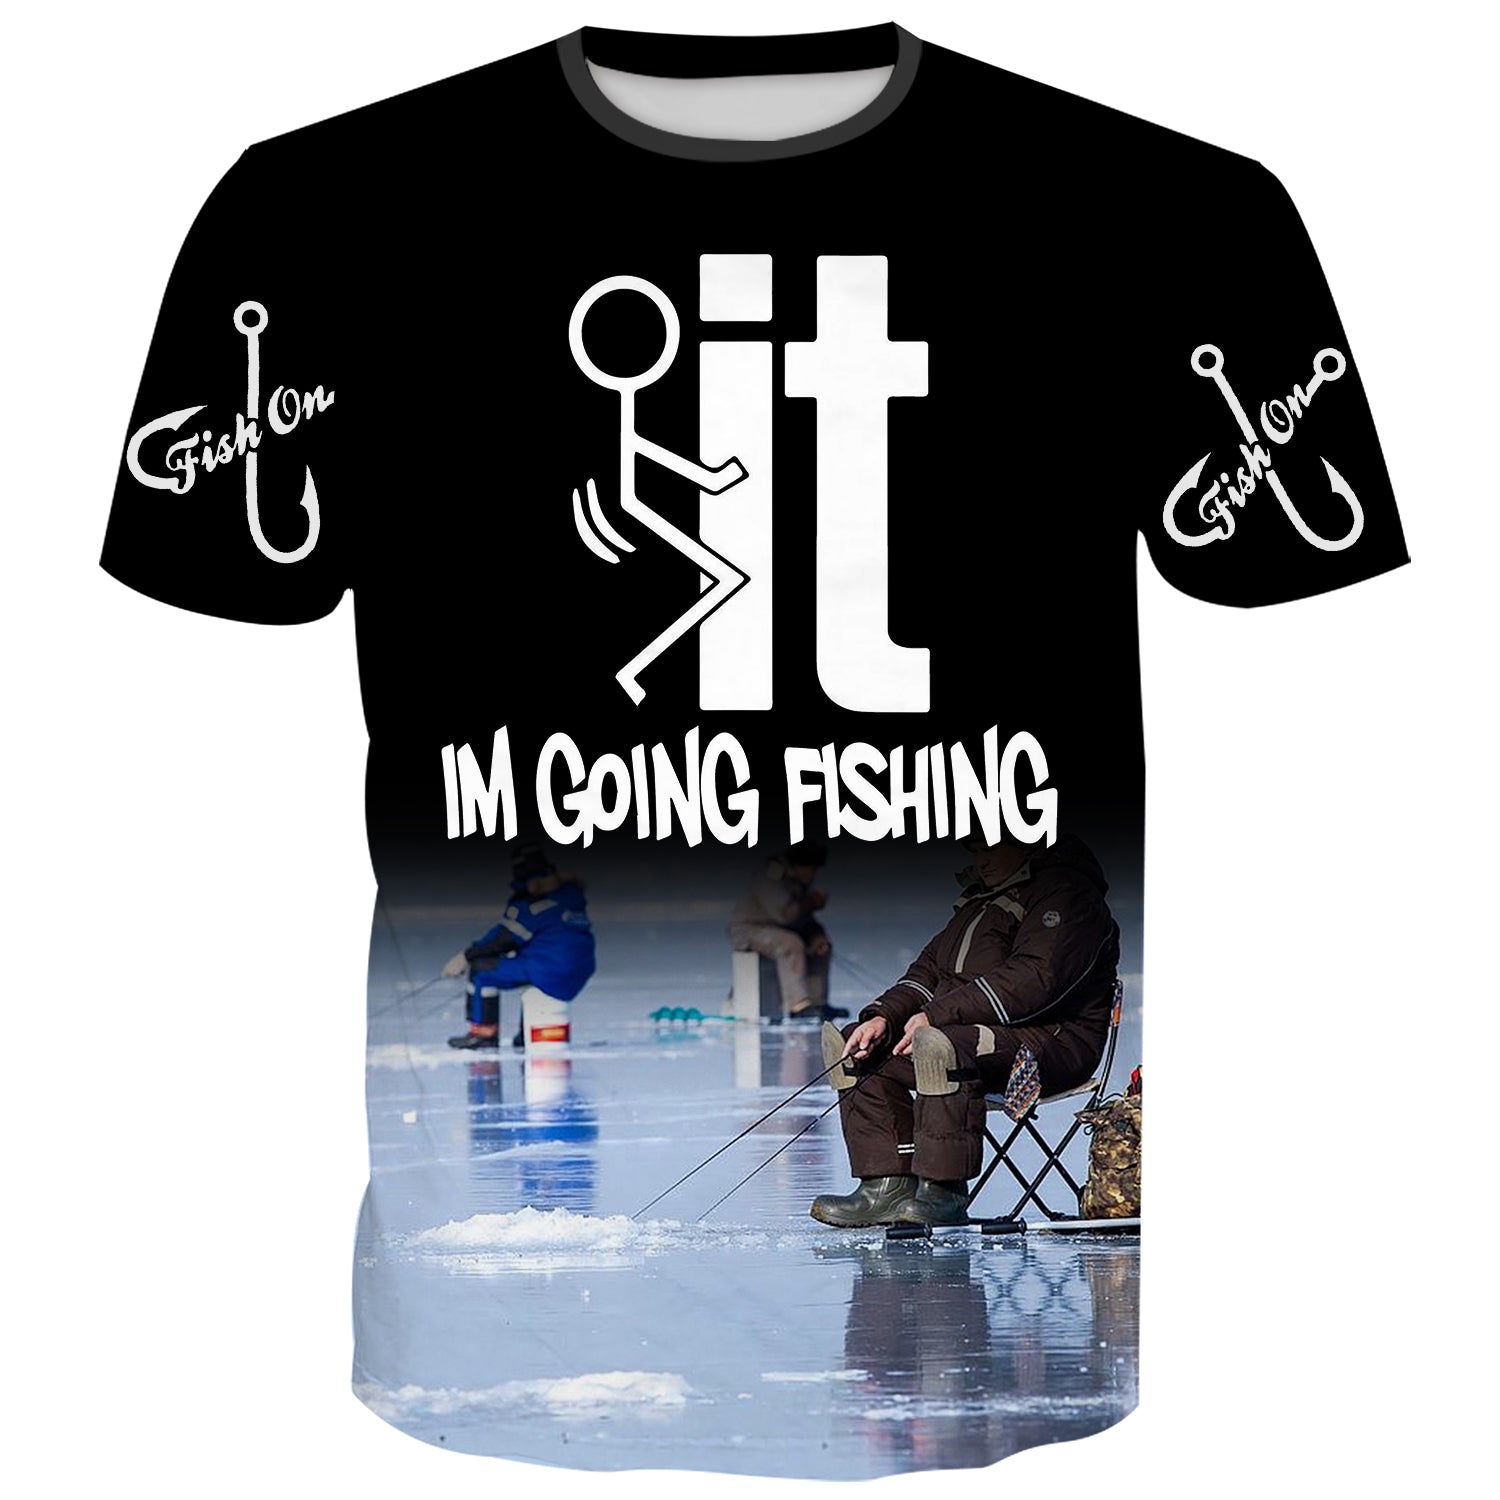 I am going Fishing T-Shirt for Men - Adventure-themed Tee